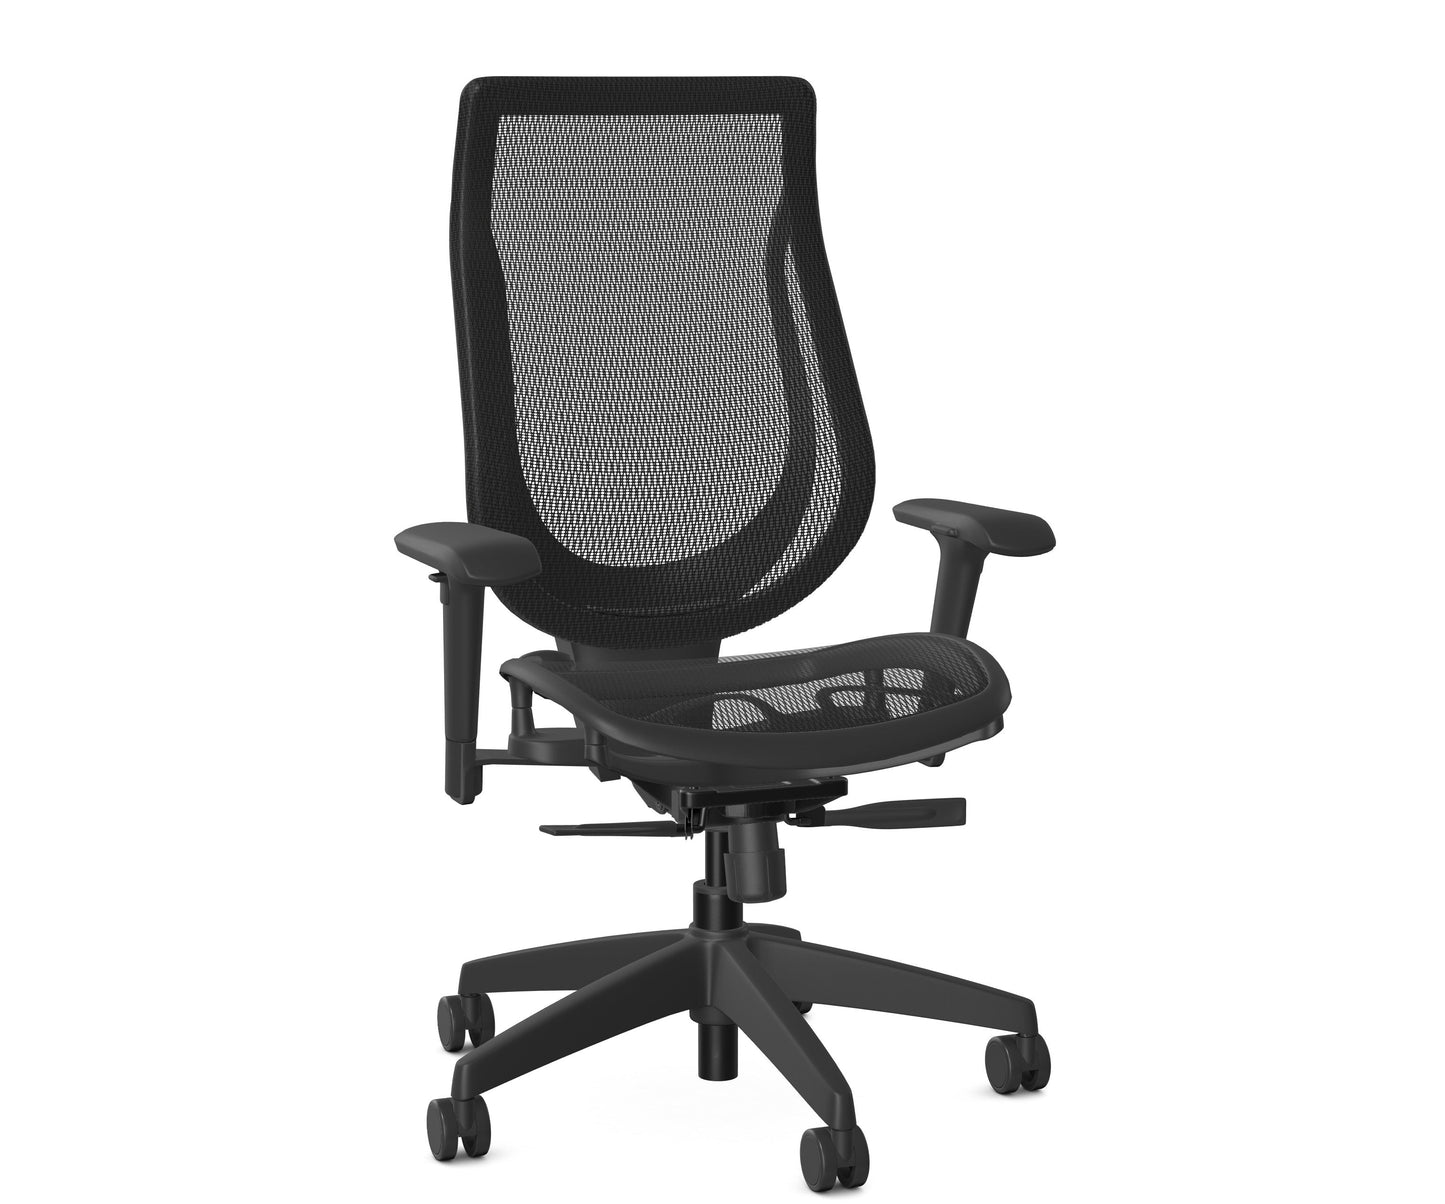 You All-Mesh High-Back Ergonomic Office Chair